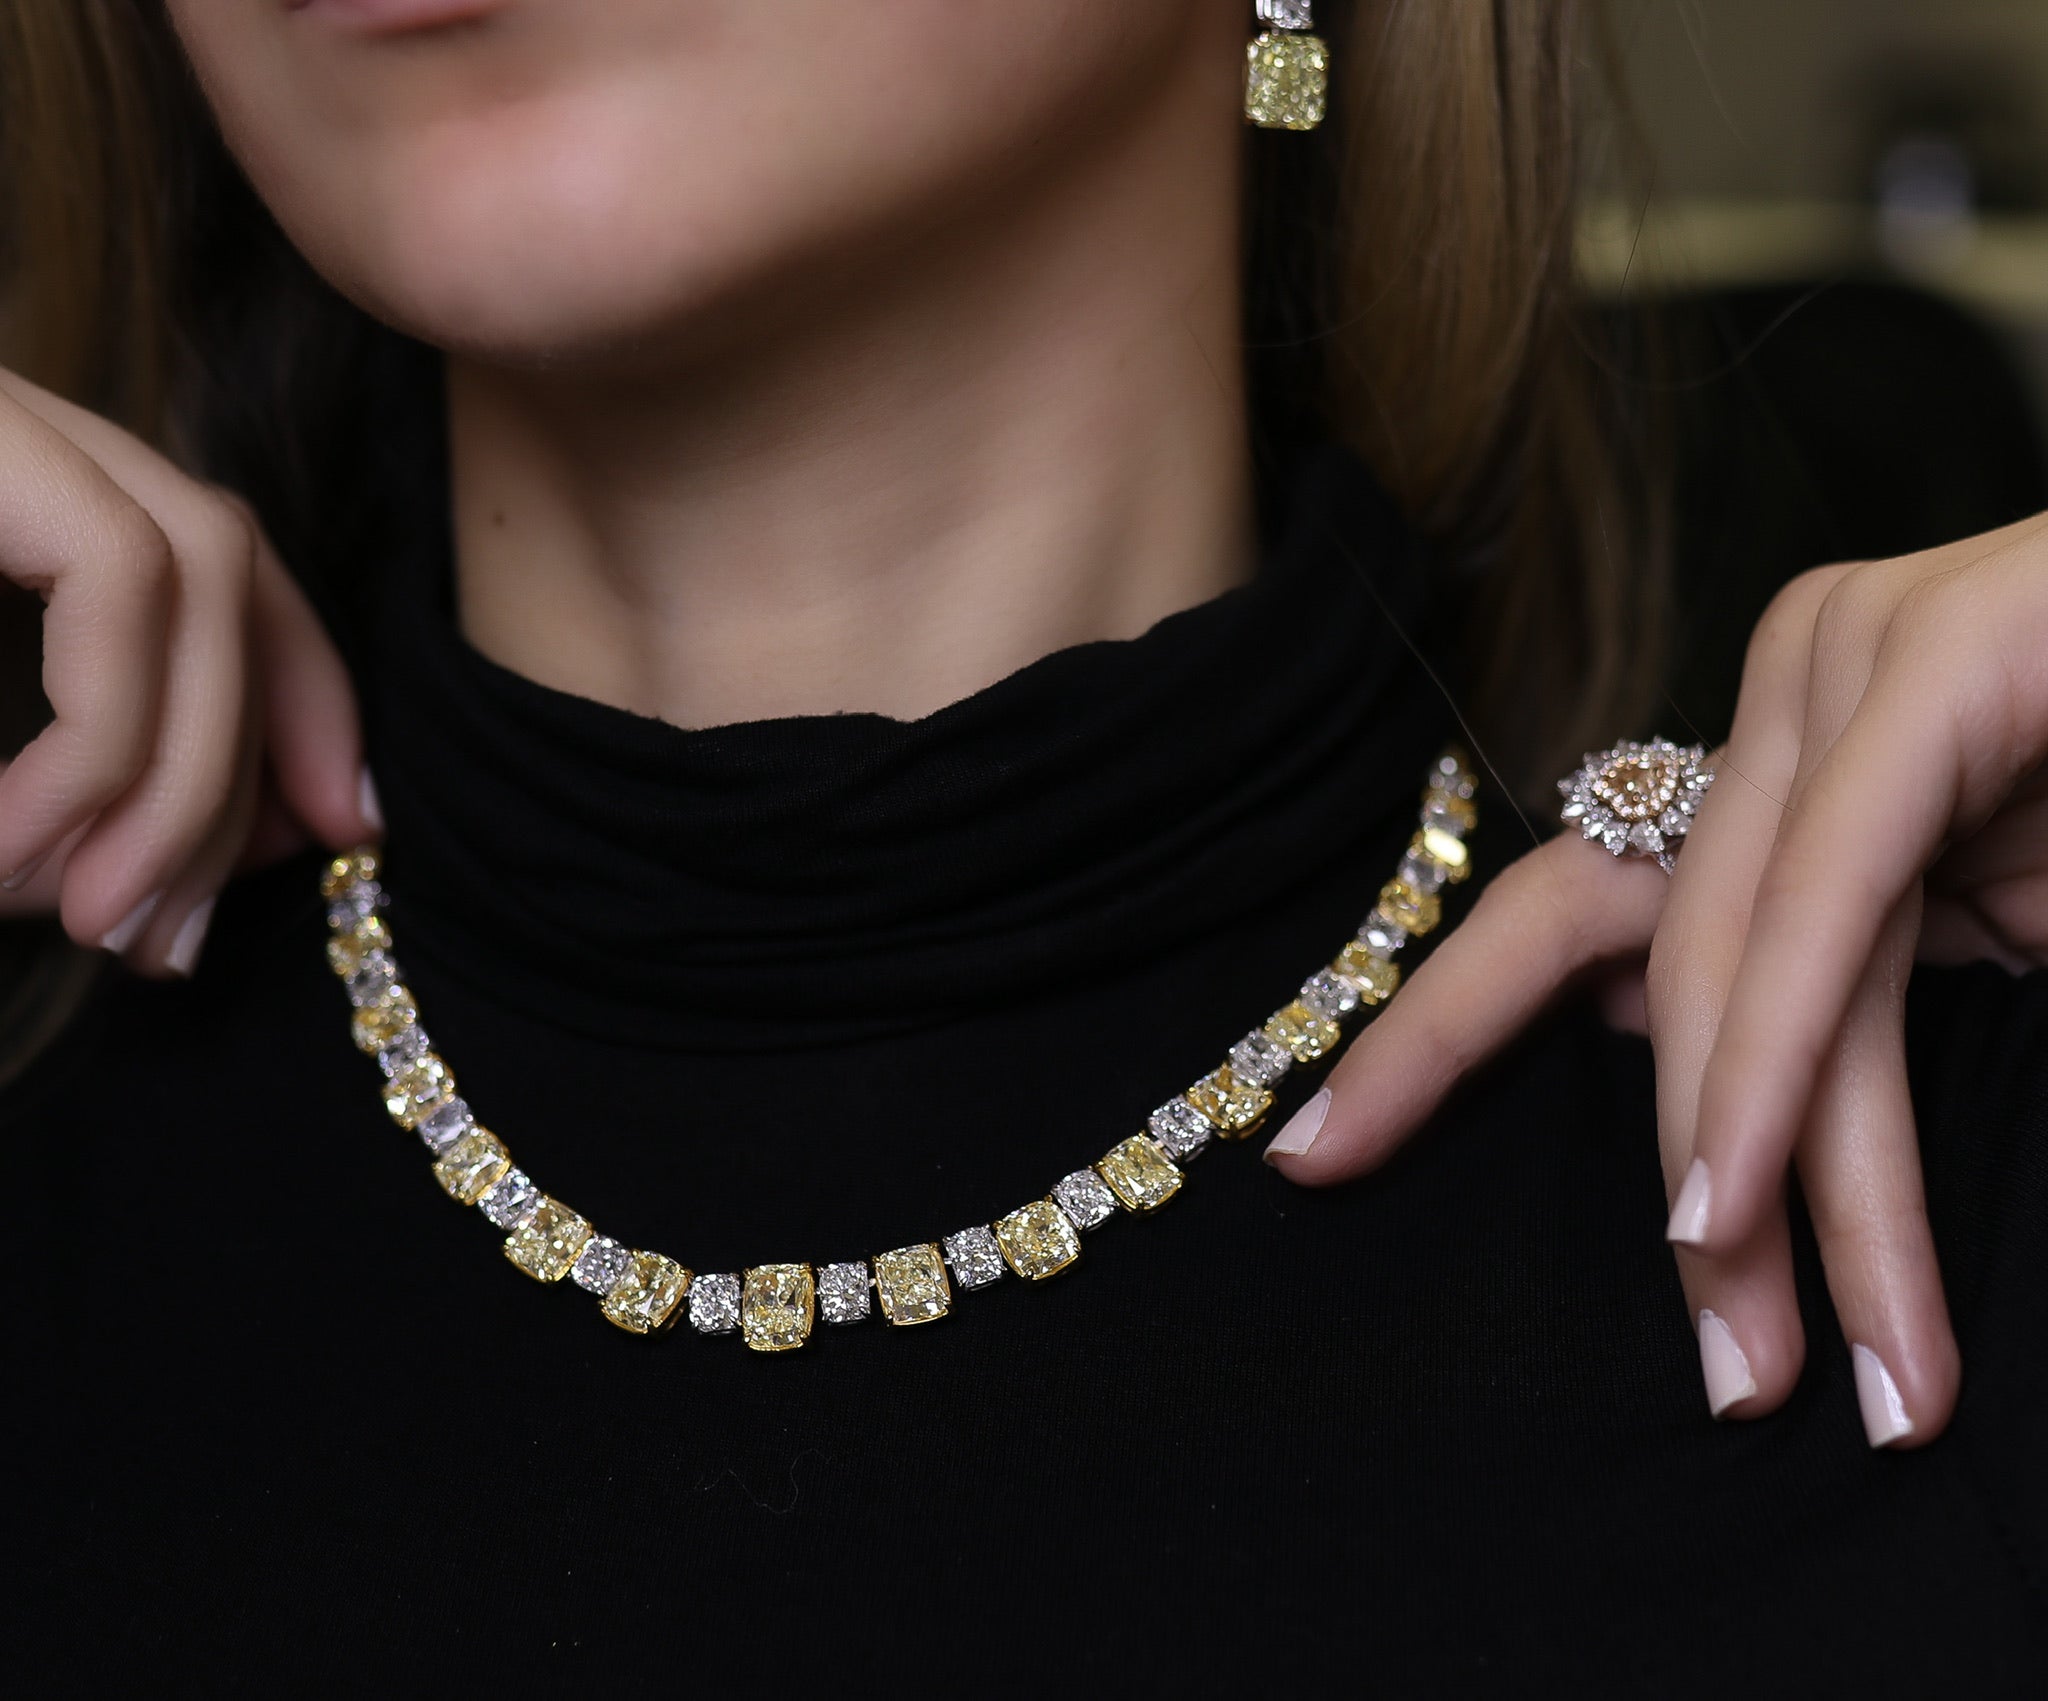 Yellow and White Diamonds Graduating Necklace - Leviev Diamonds